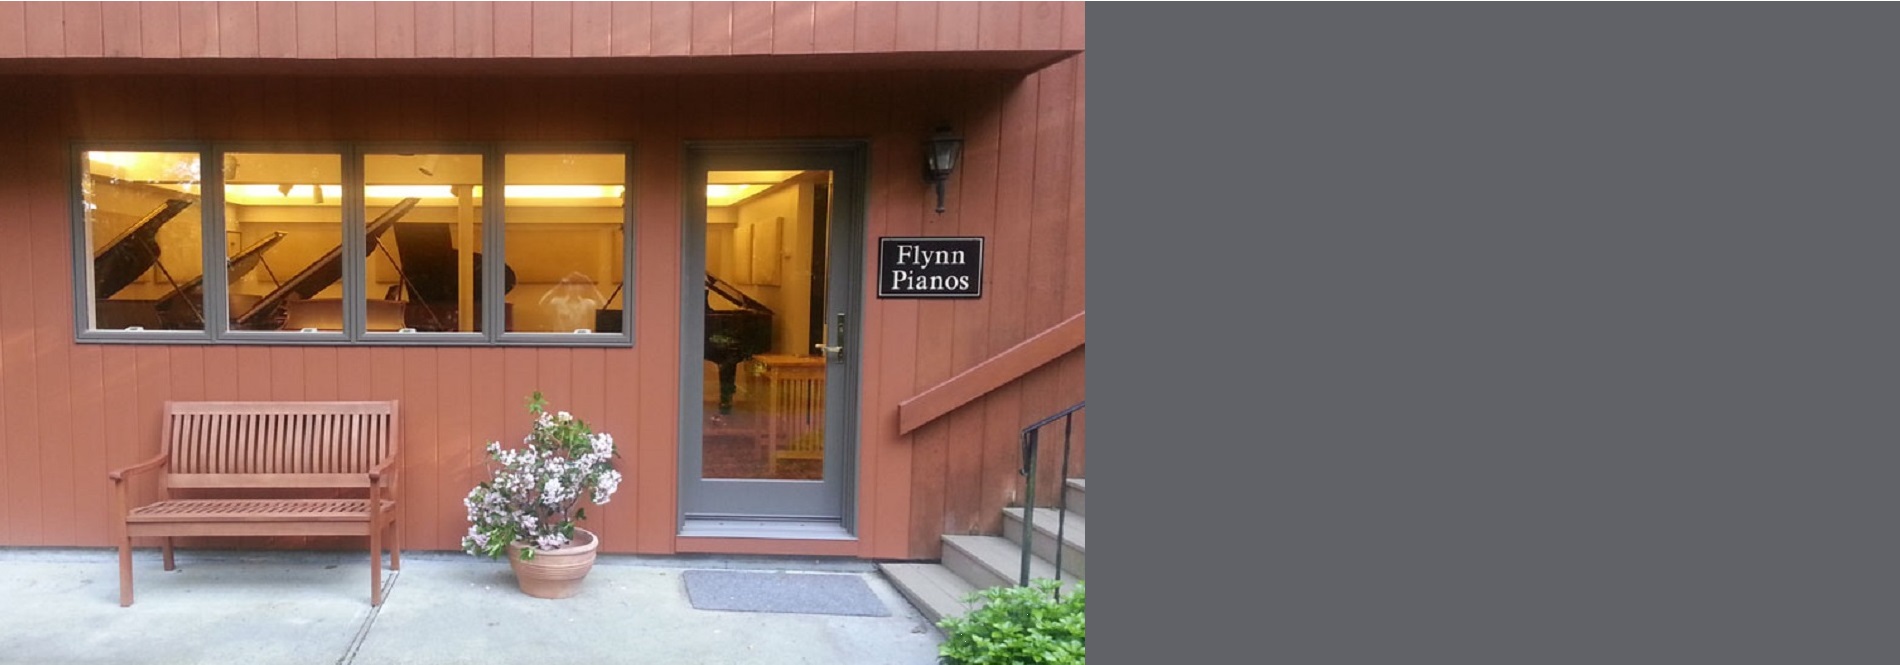 Flynn Pianos Showroom at 11 Hemlock Hill in Great Barrington, MA 01230.